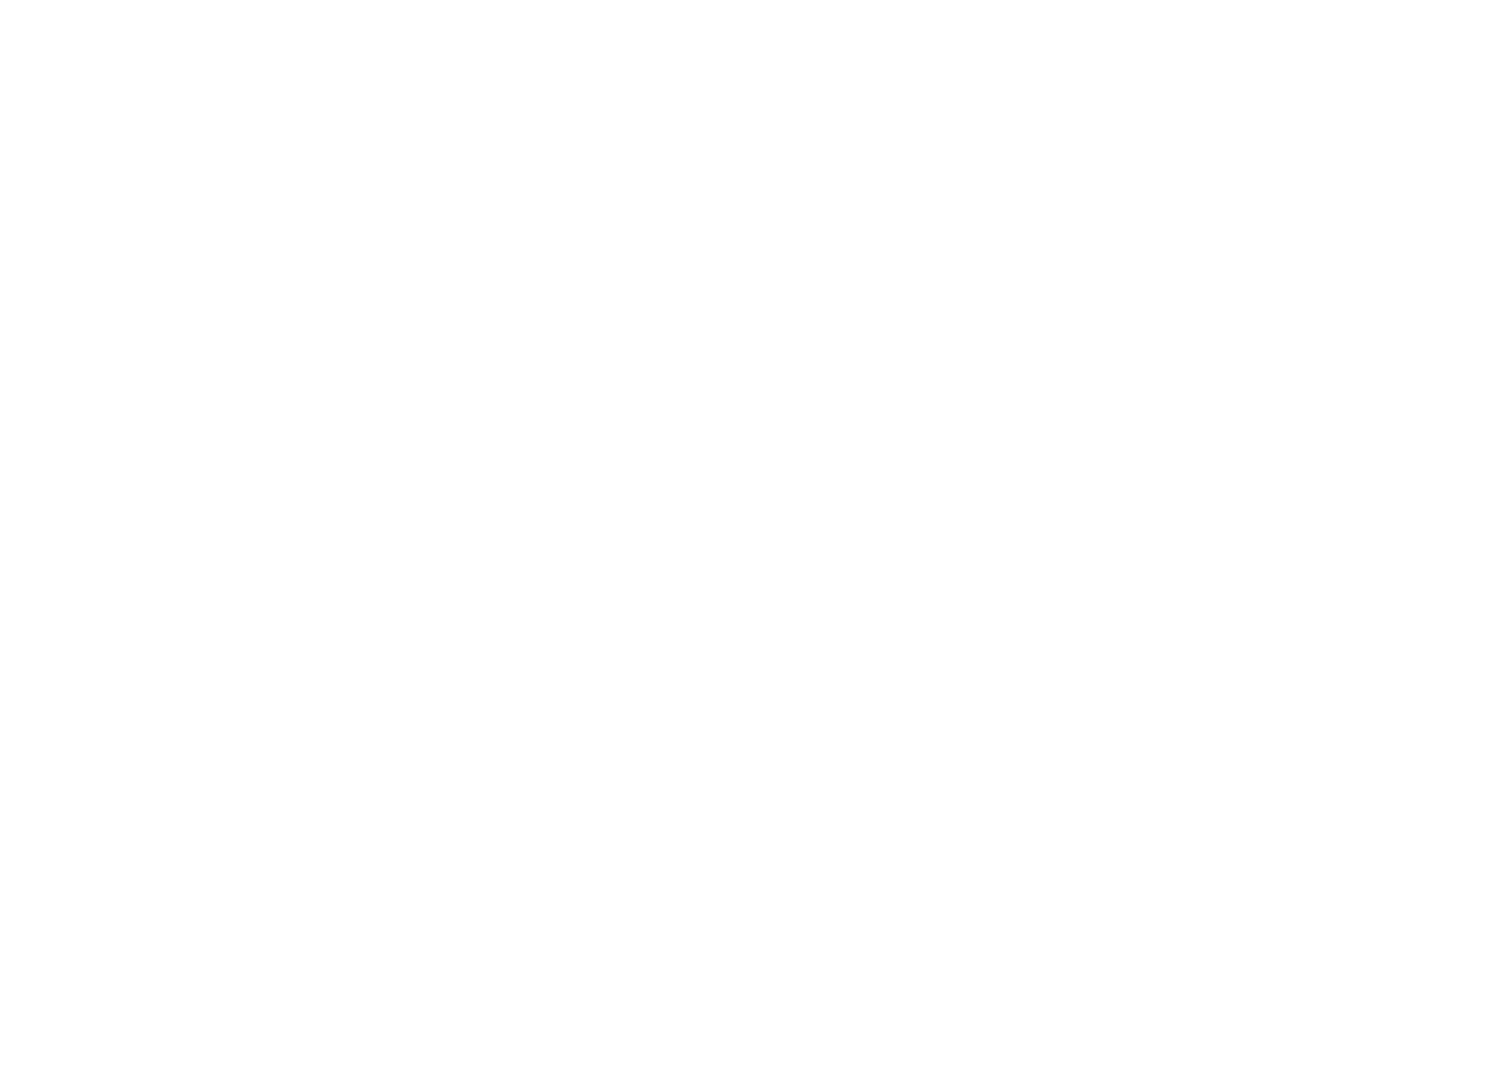 PEAVEY COMPANIES